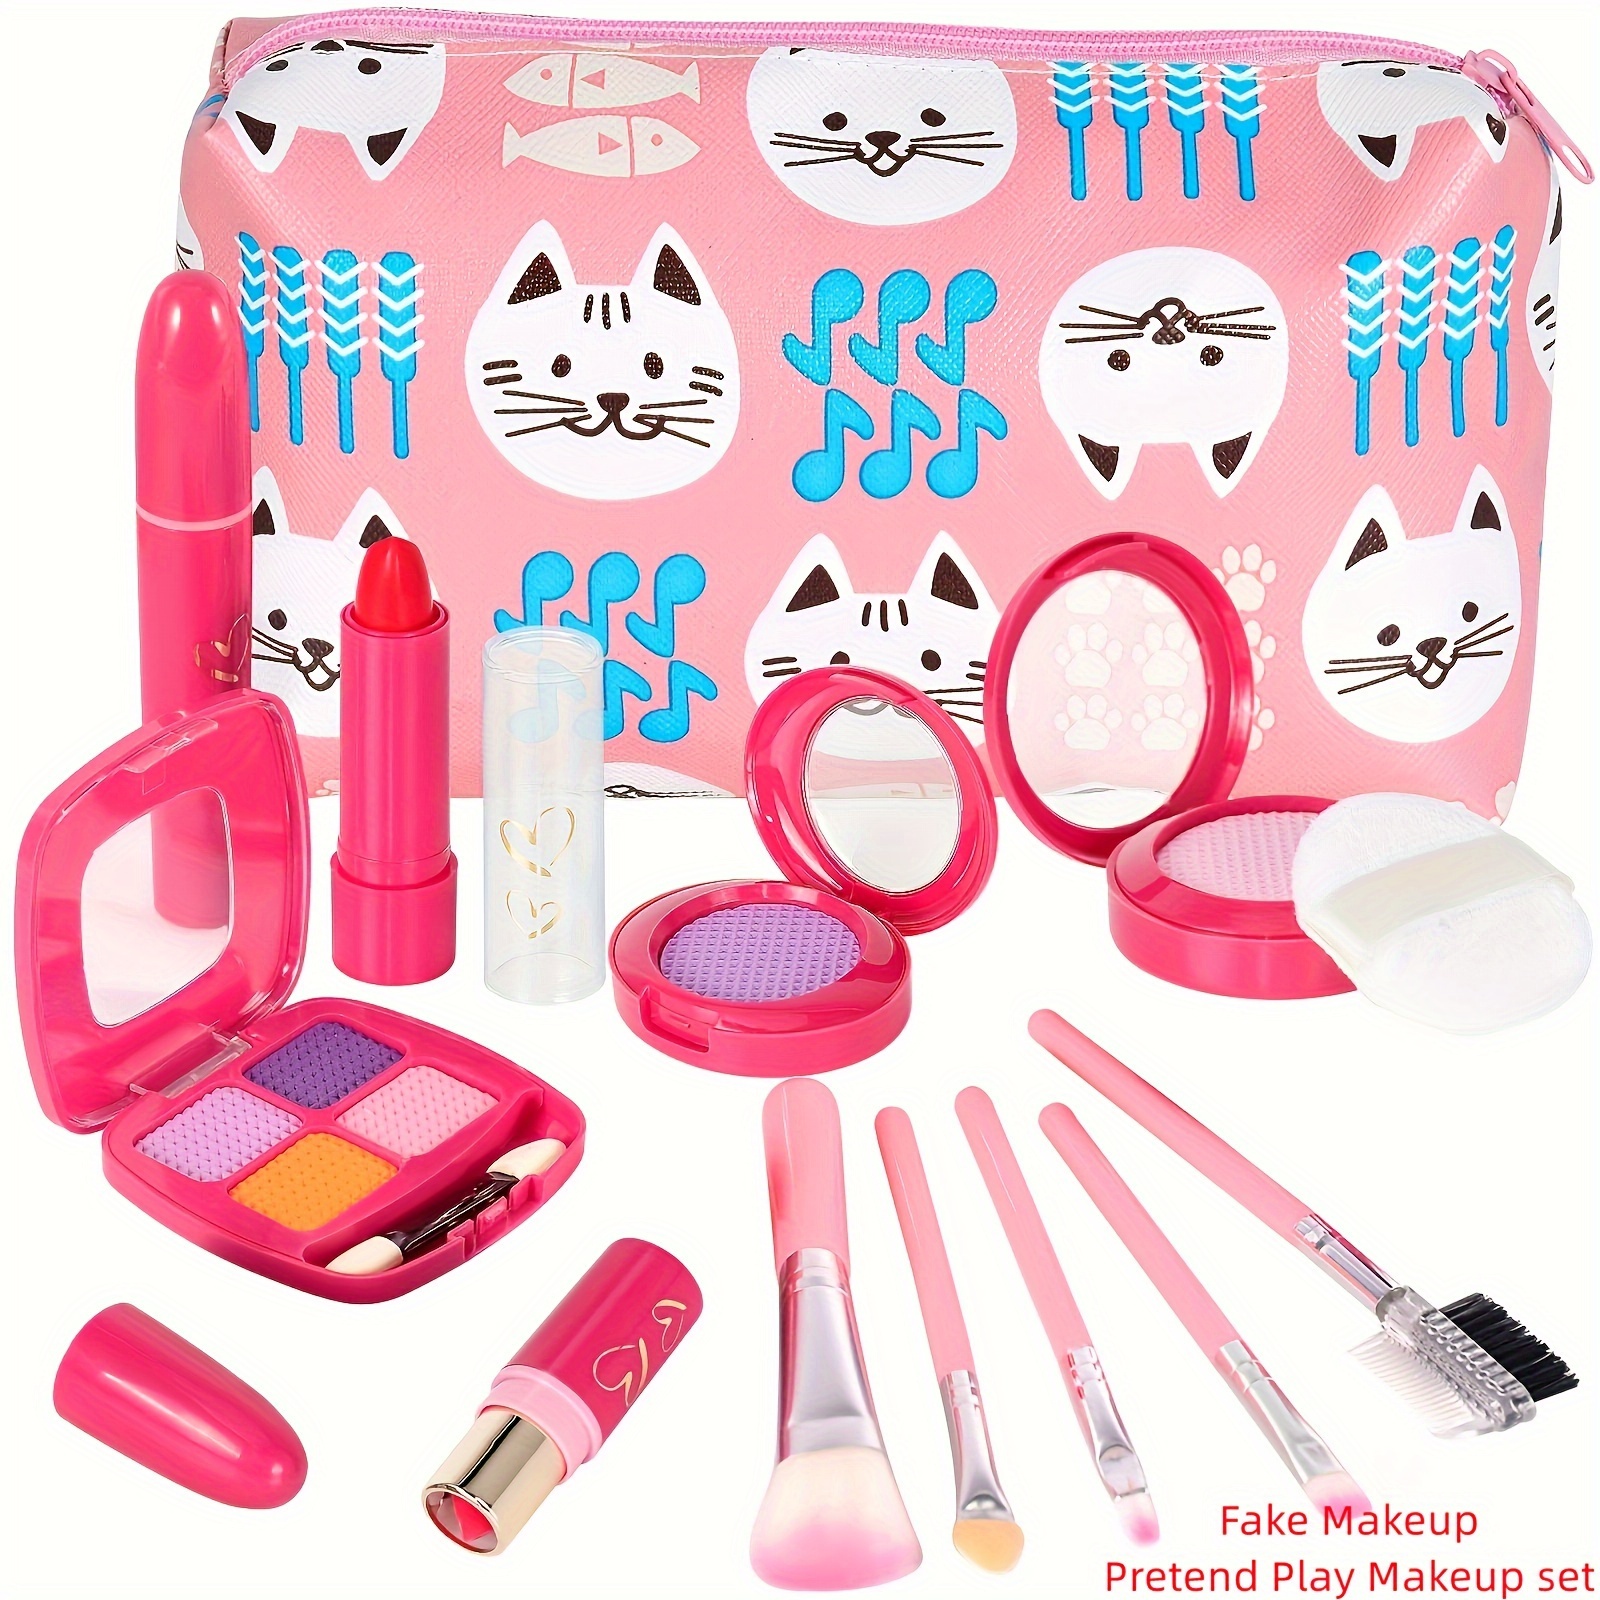 Kit de maquillaje para niños para niñas, 52 piezas de maquillaje